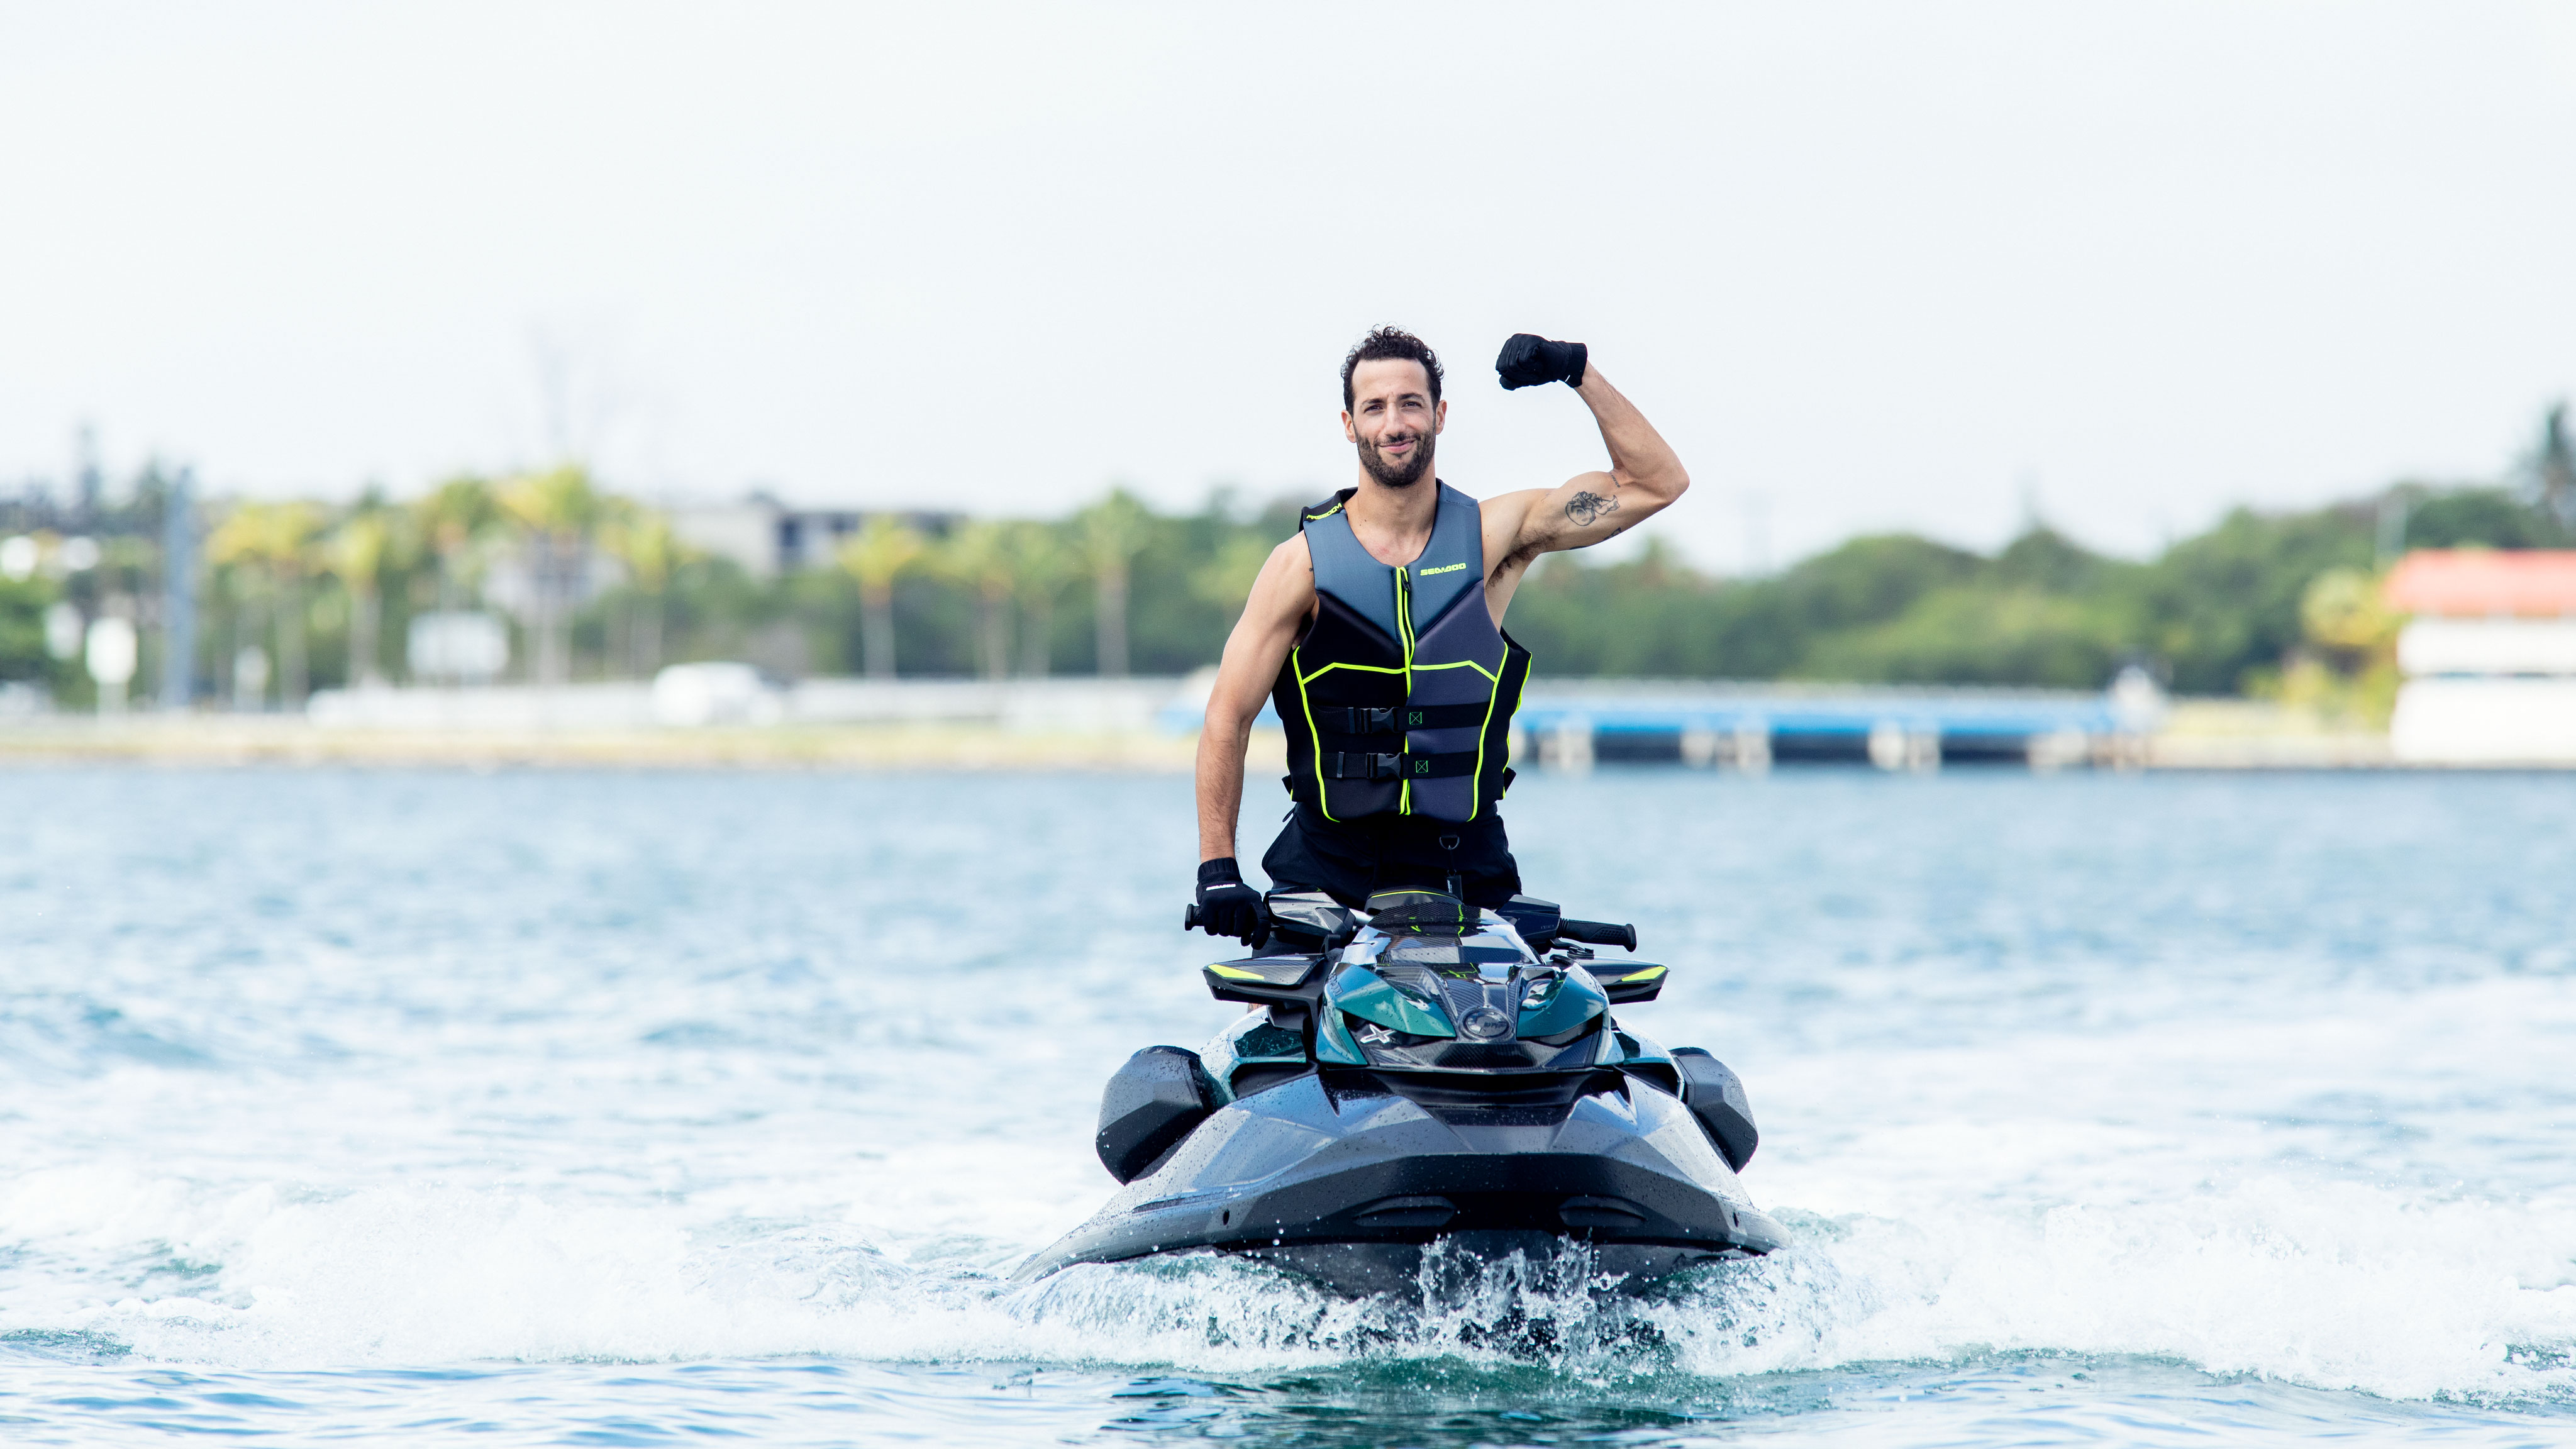 Daniel Ricciardo on the new Sea-Doo performance watercraft